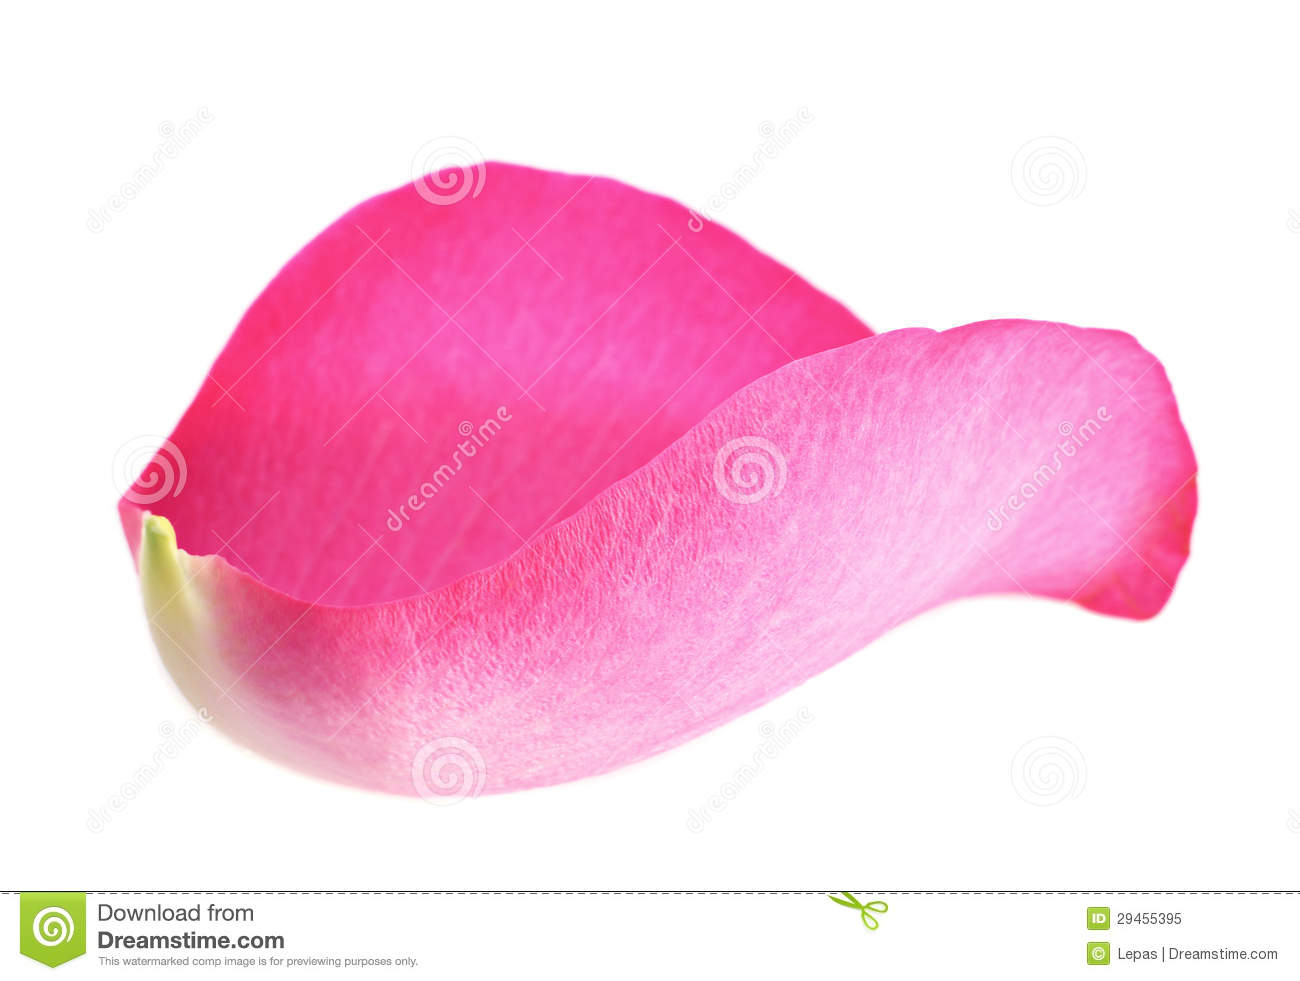 Rose Petal In Water Drops Royalty Free Stock Photo   Image  29455395